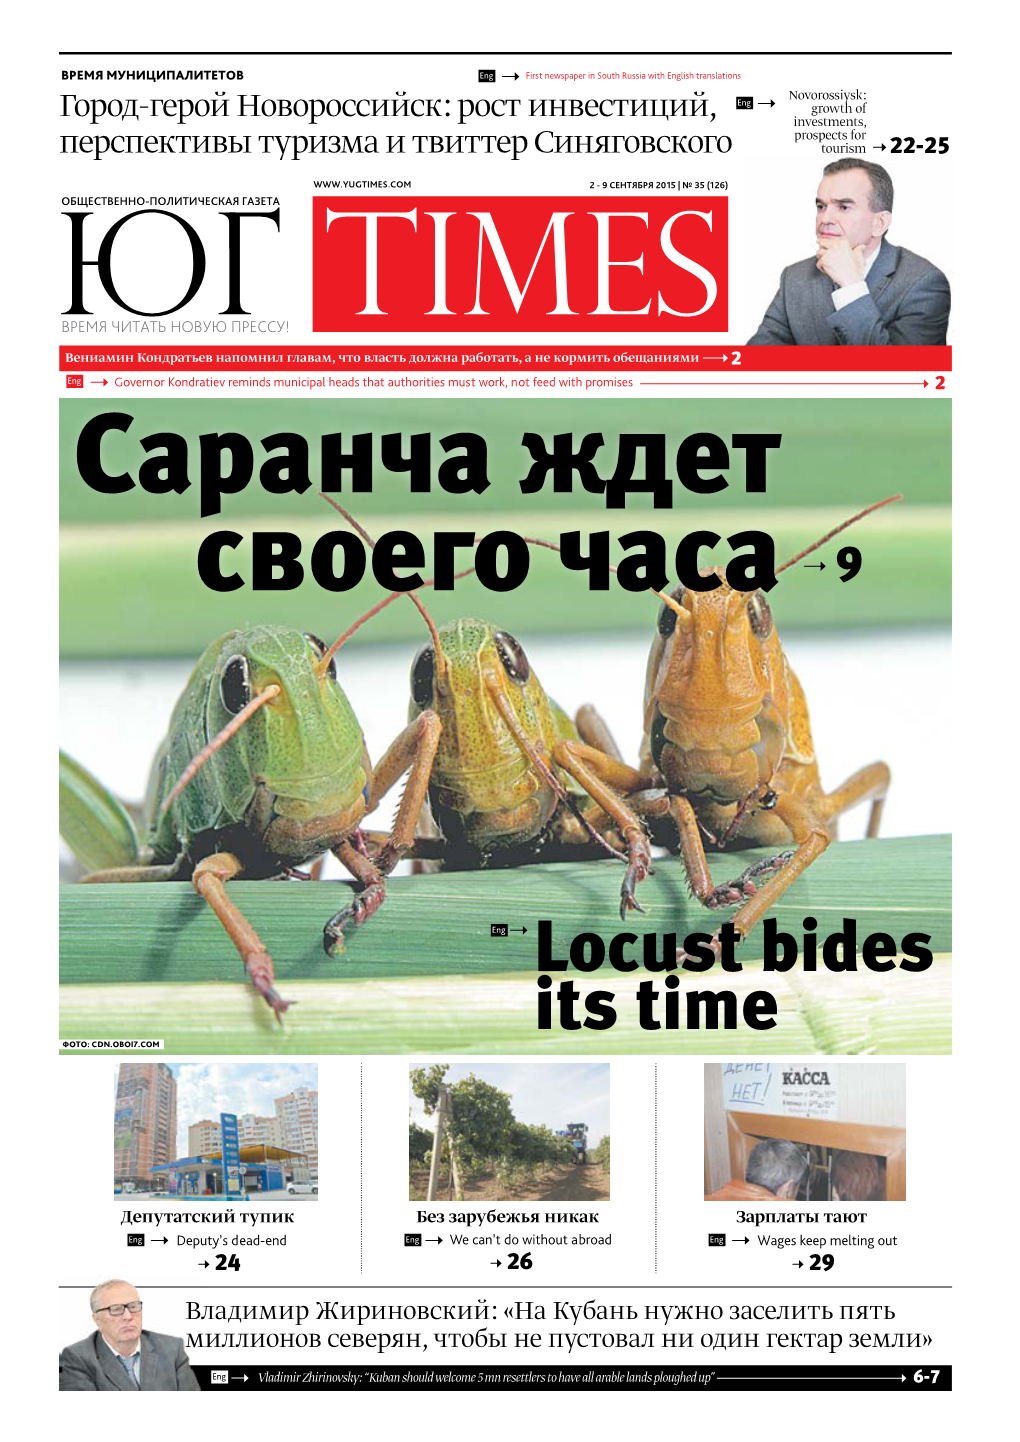 Locust Bides Its Time ФОТО: CDN.OBOI7.COM